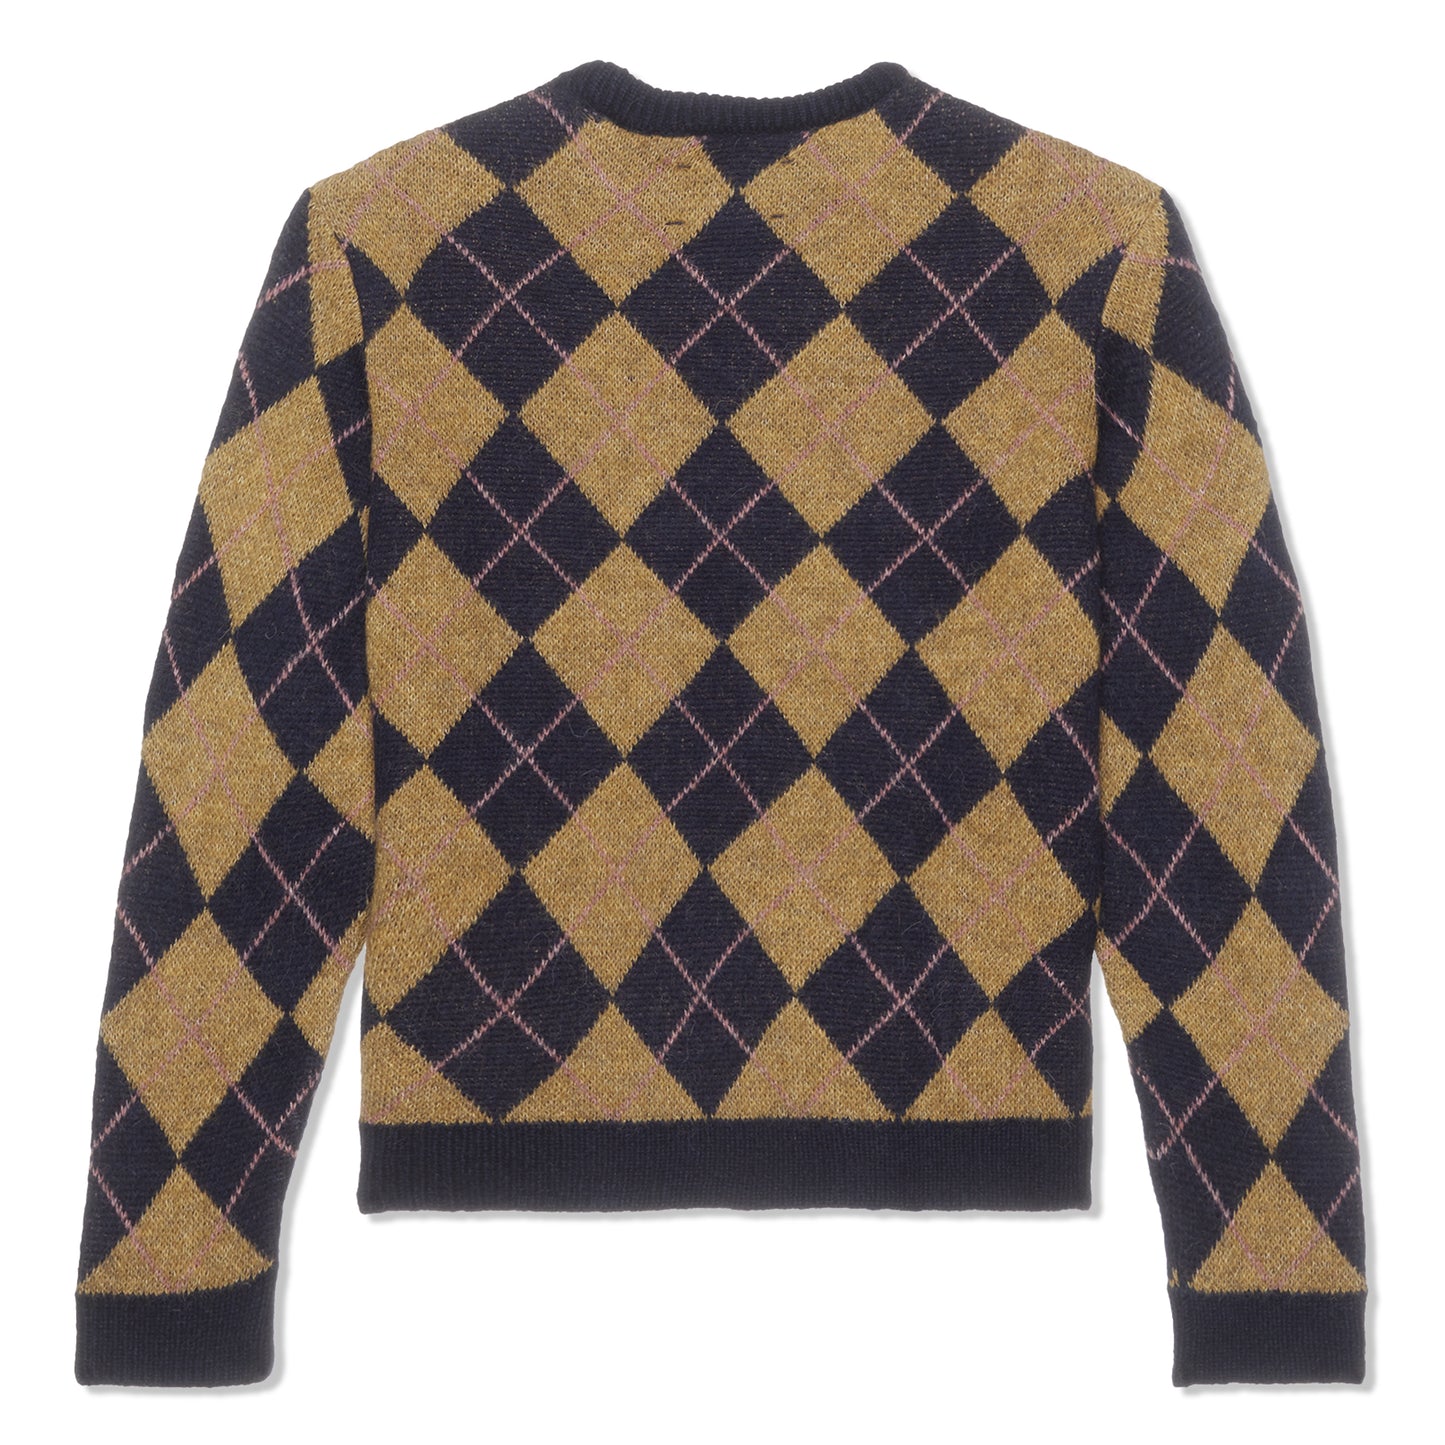 Awake NY Argyle Mohair Sweater (Brown Multi)